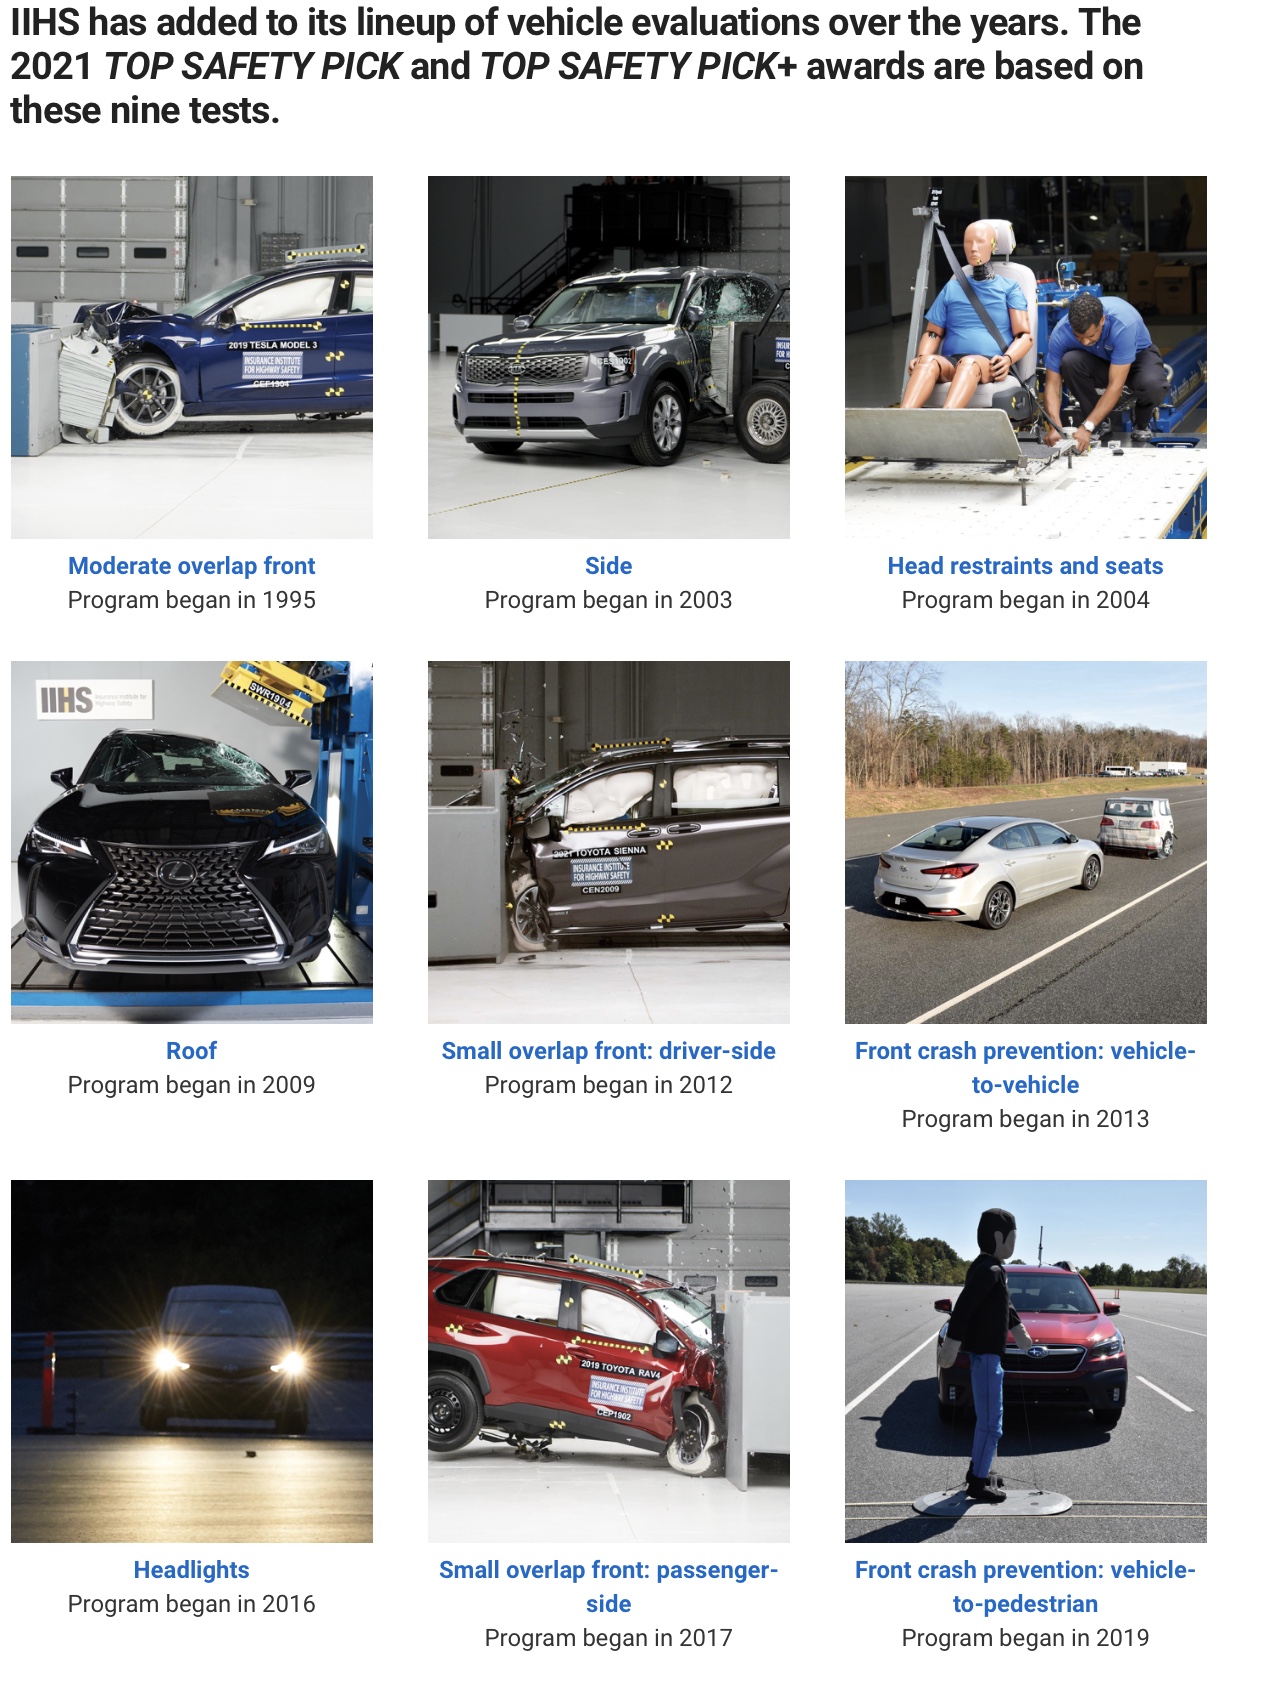 Test de radars anti-collision - Tests automobiles